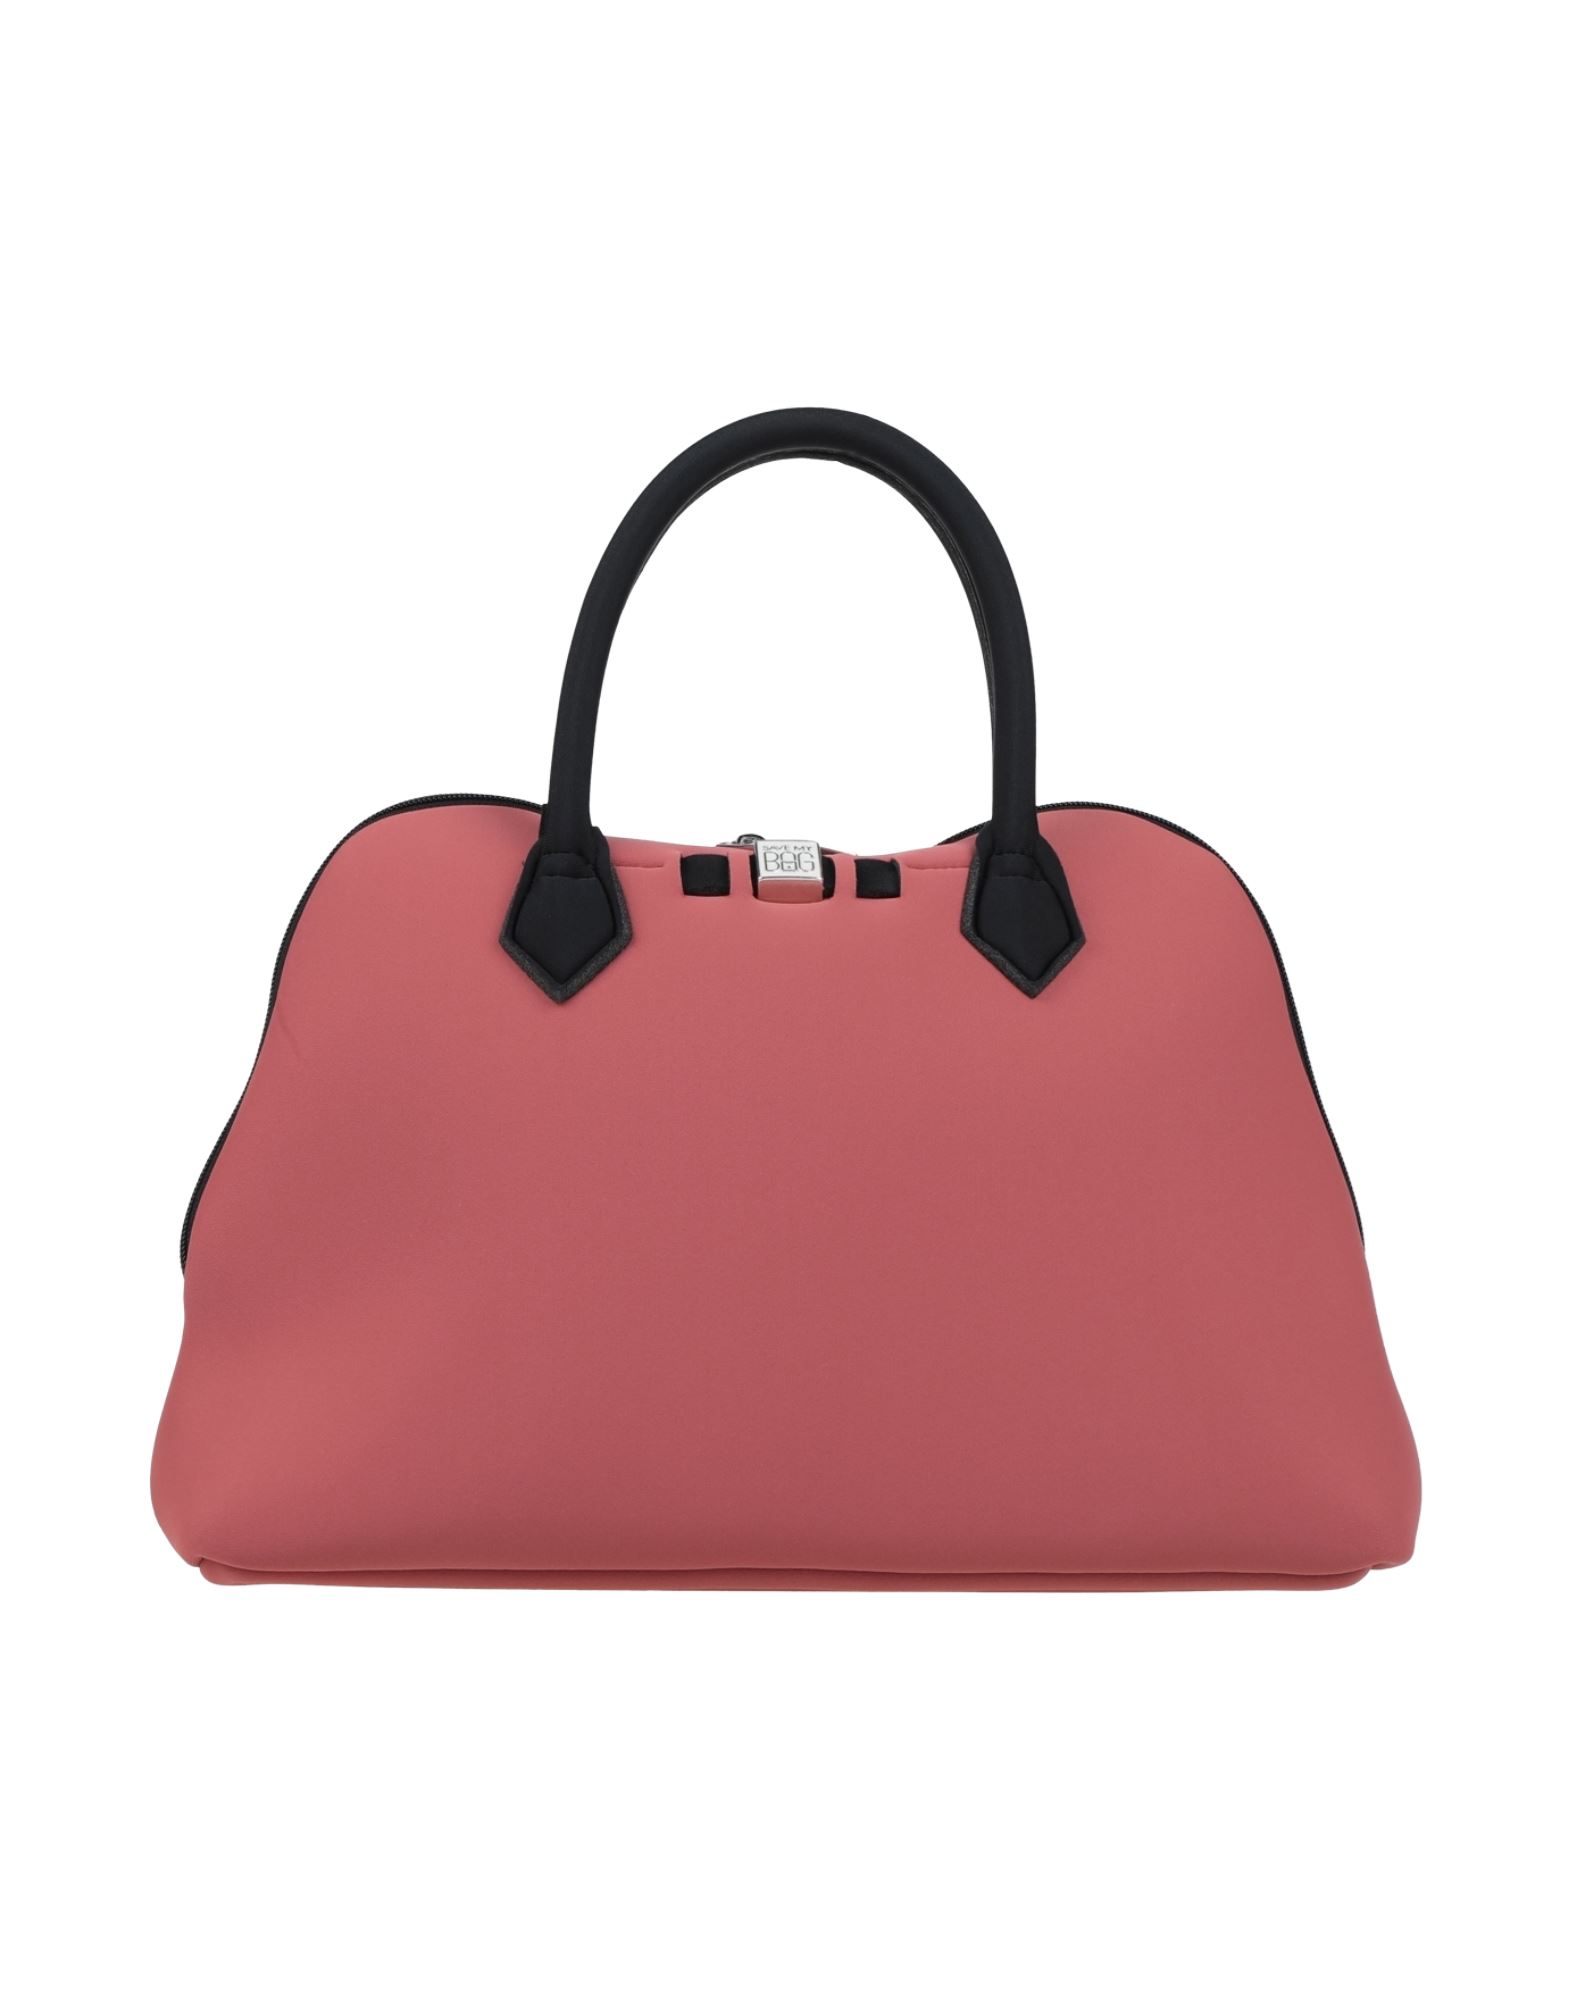 Save My Bag Handbags In Pastel Pink